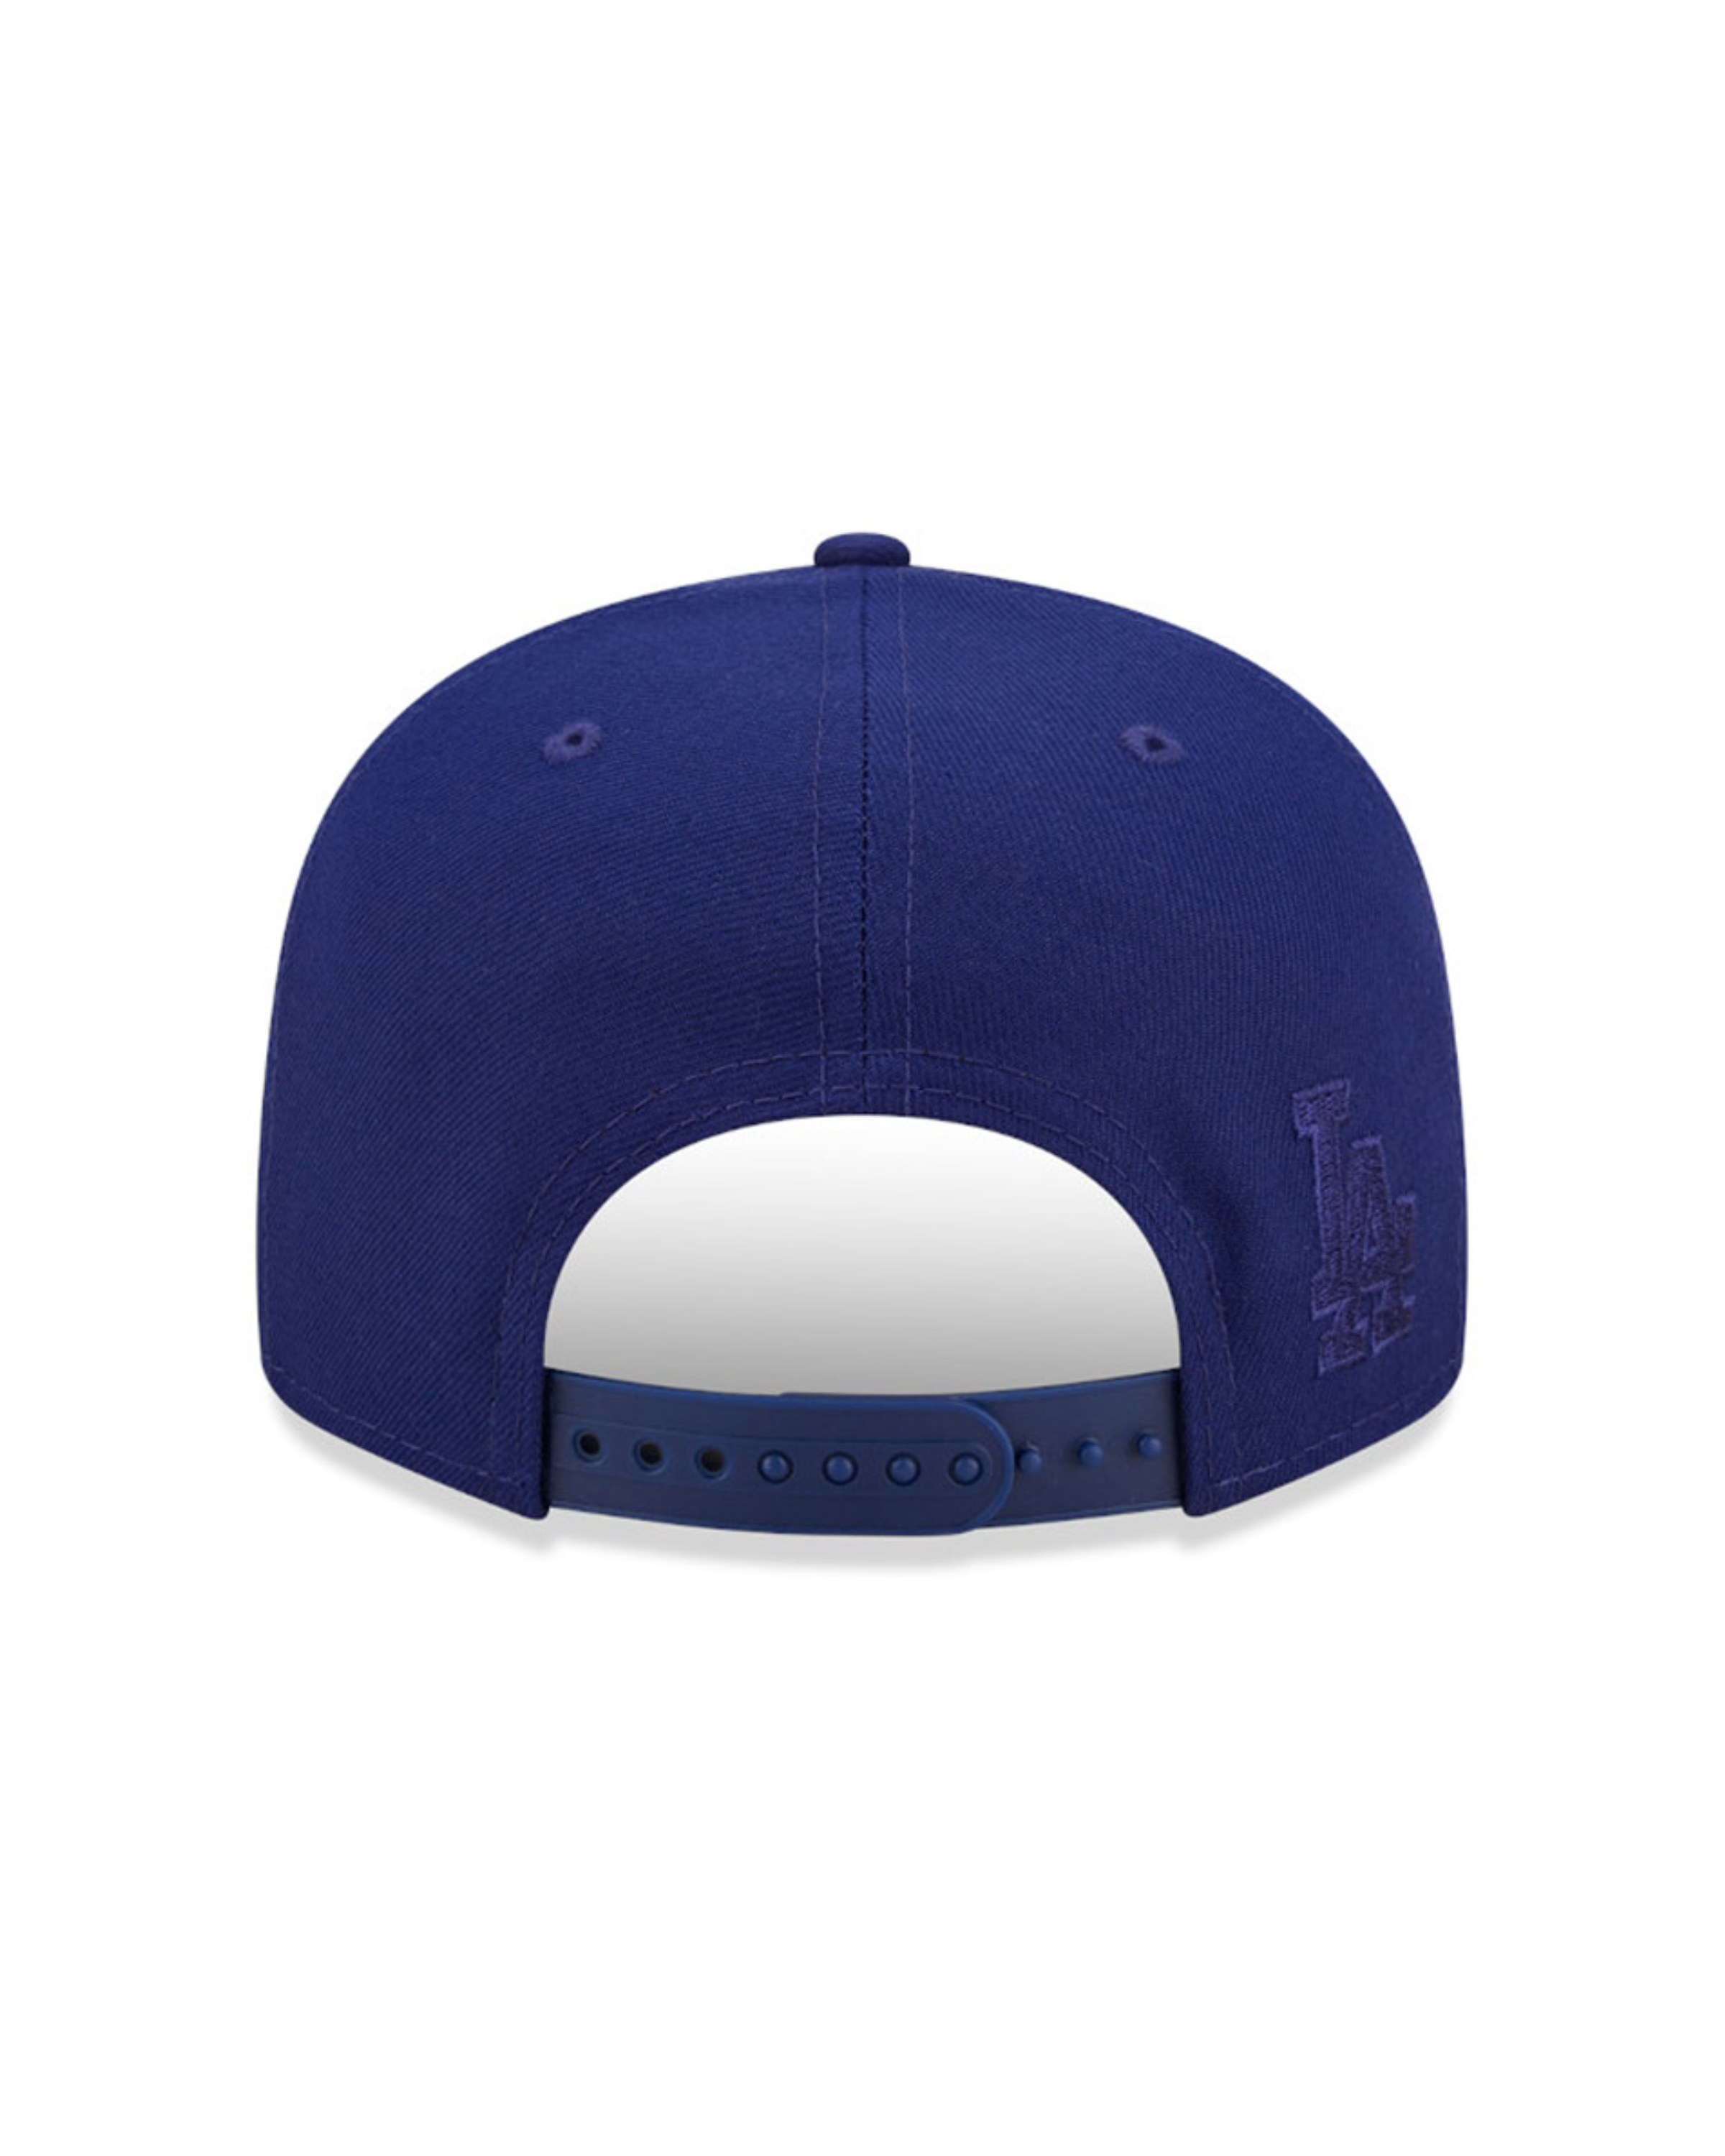 LA Dodgers Typo Patch Blue 9FIFTY Snapback Cap